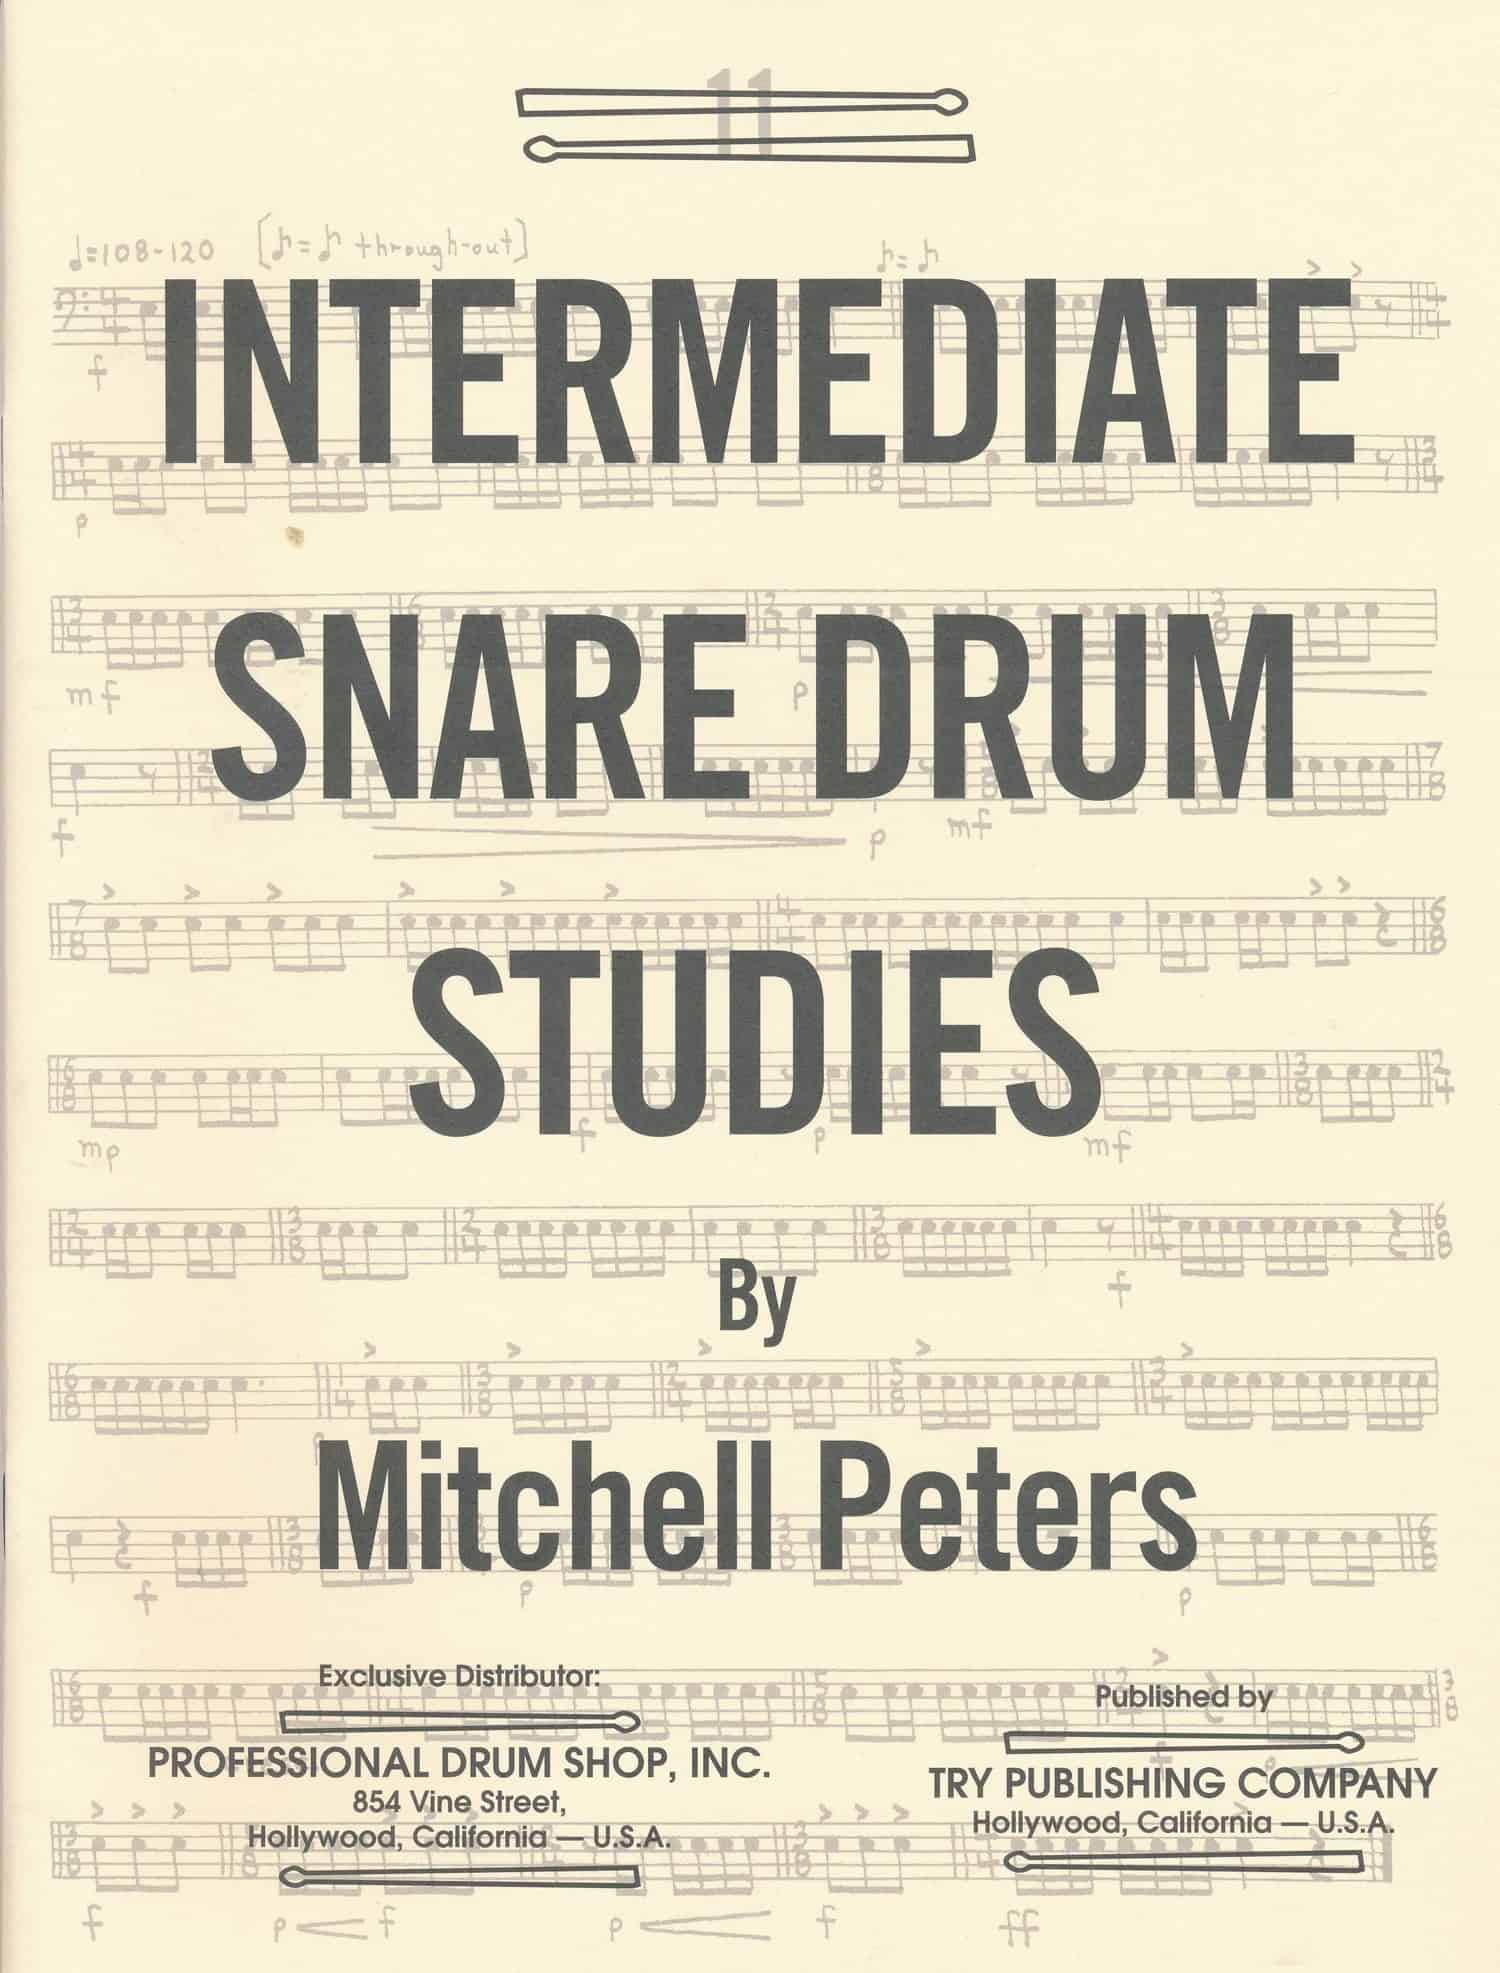 Intermediate Snare Drum Studies by Mitchell Peters